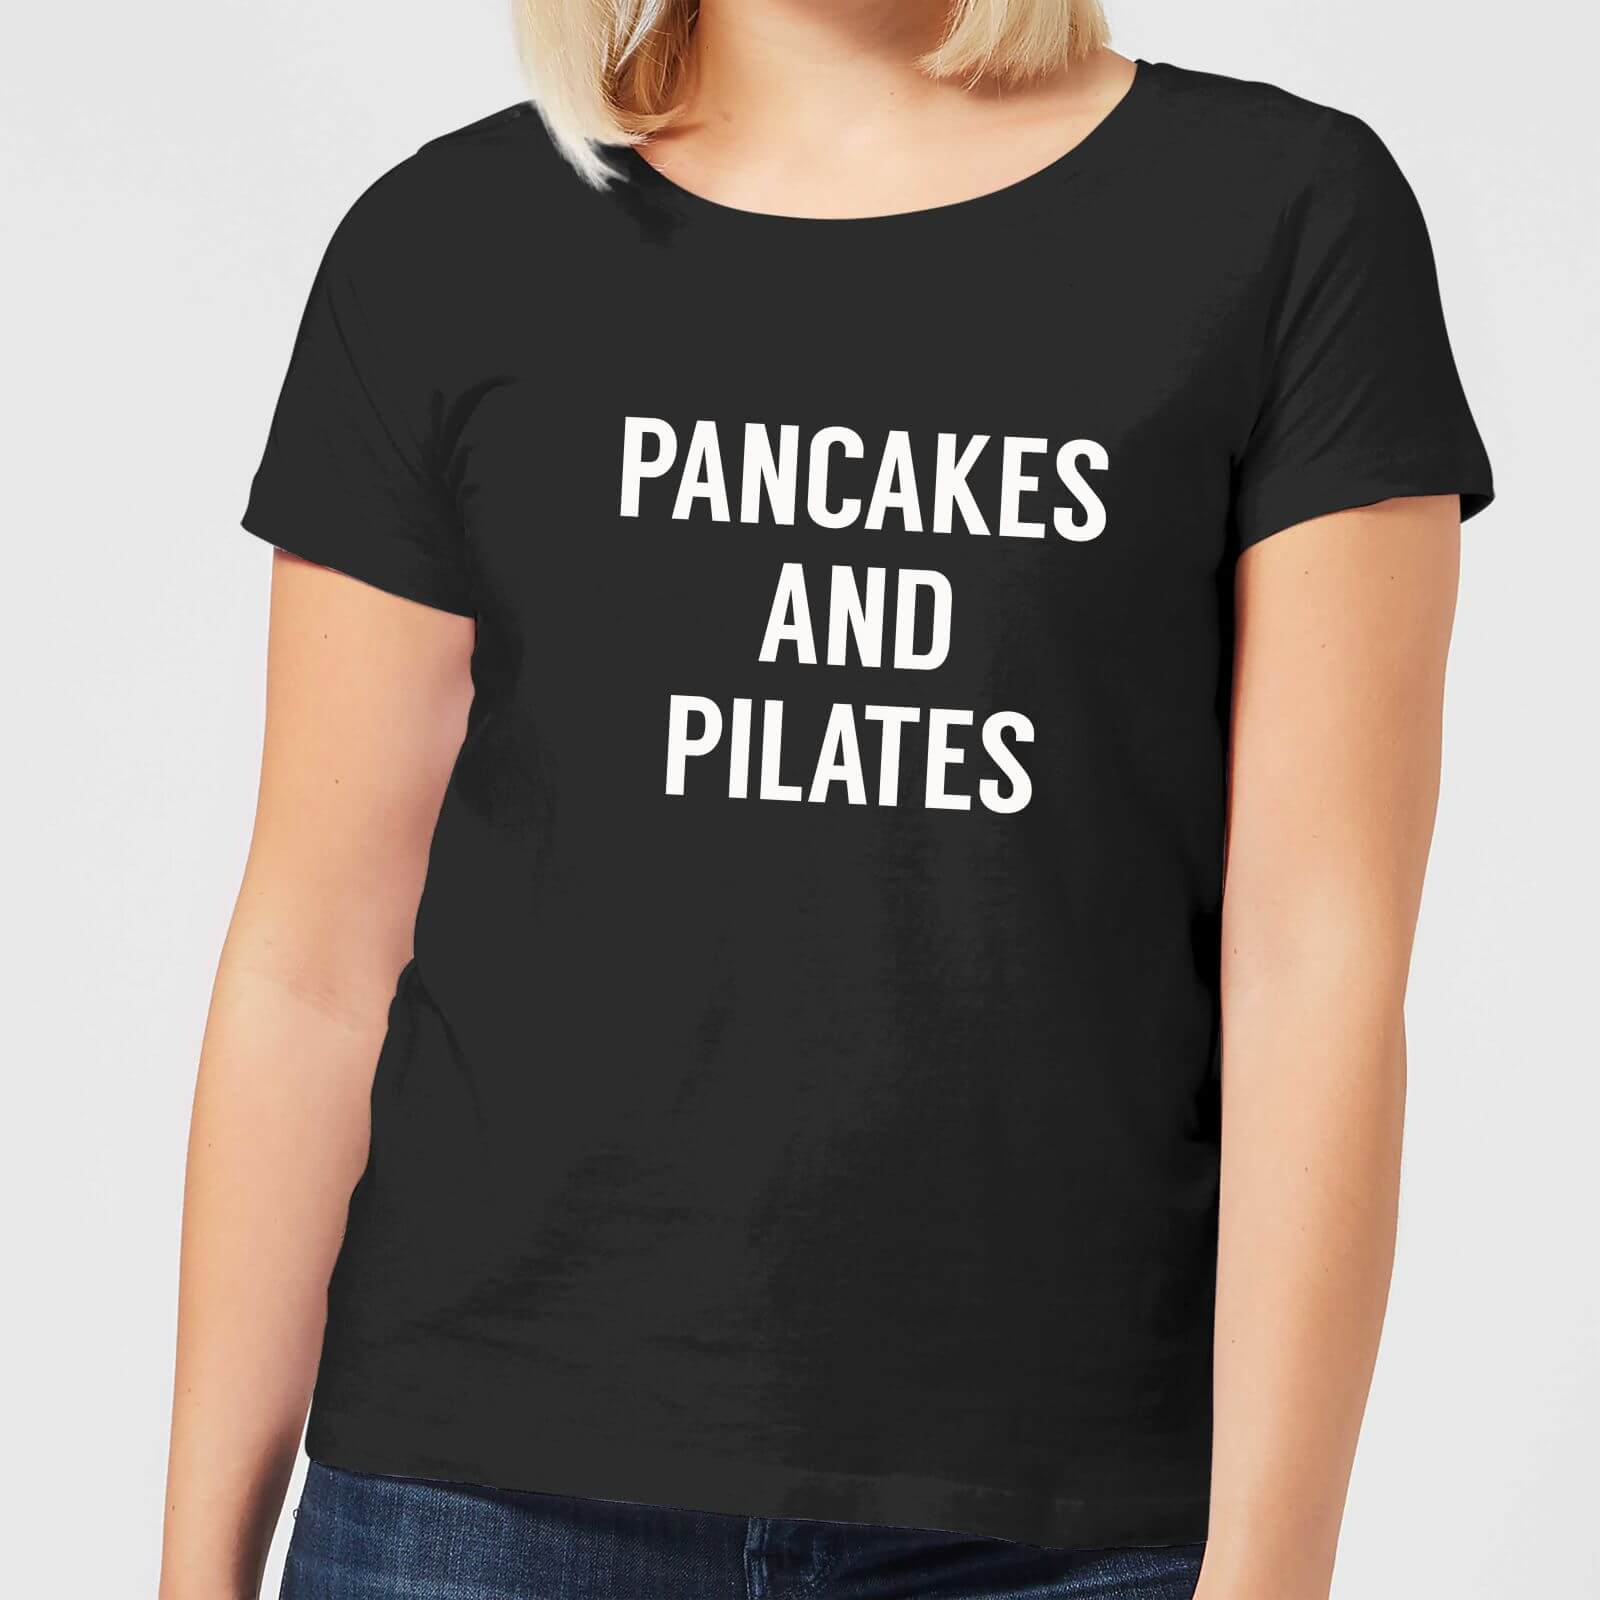 Pancakes and Pilates Women's T-Shirt - Black - 3XL - Black